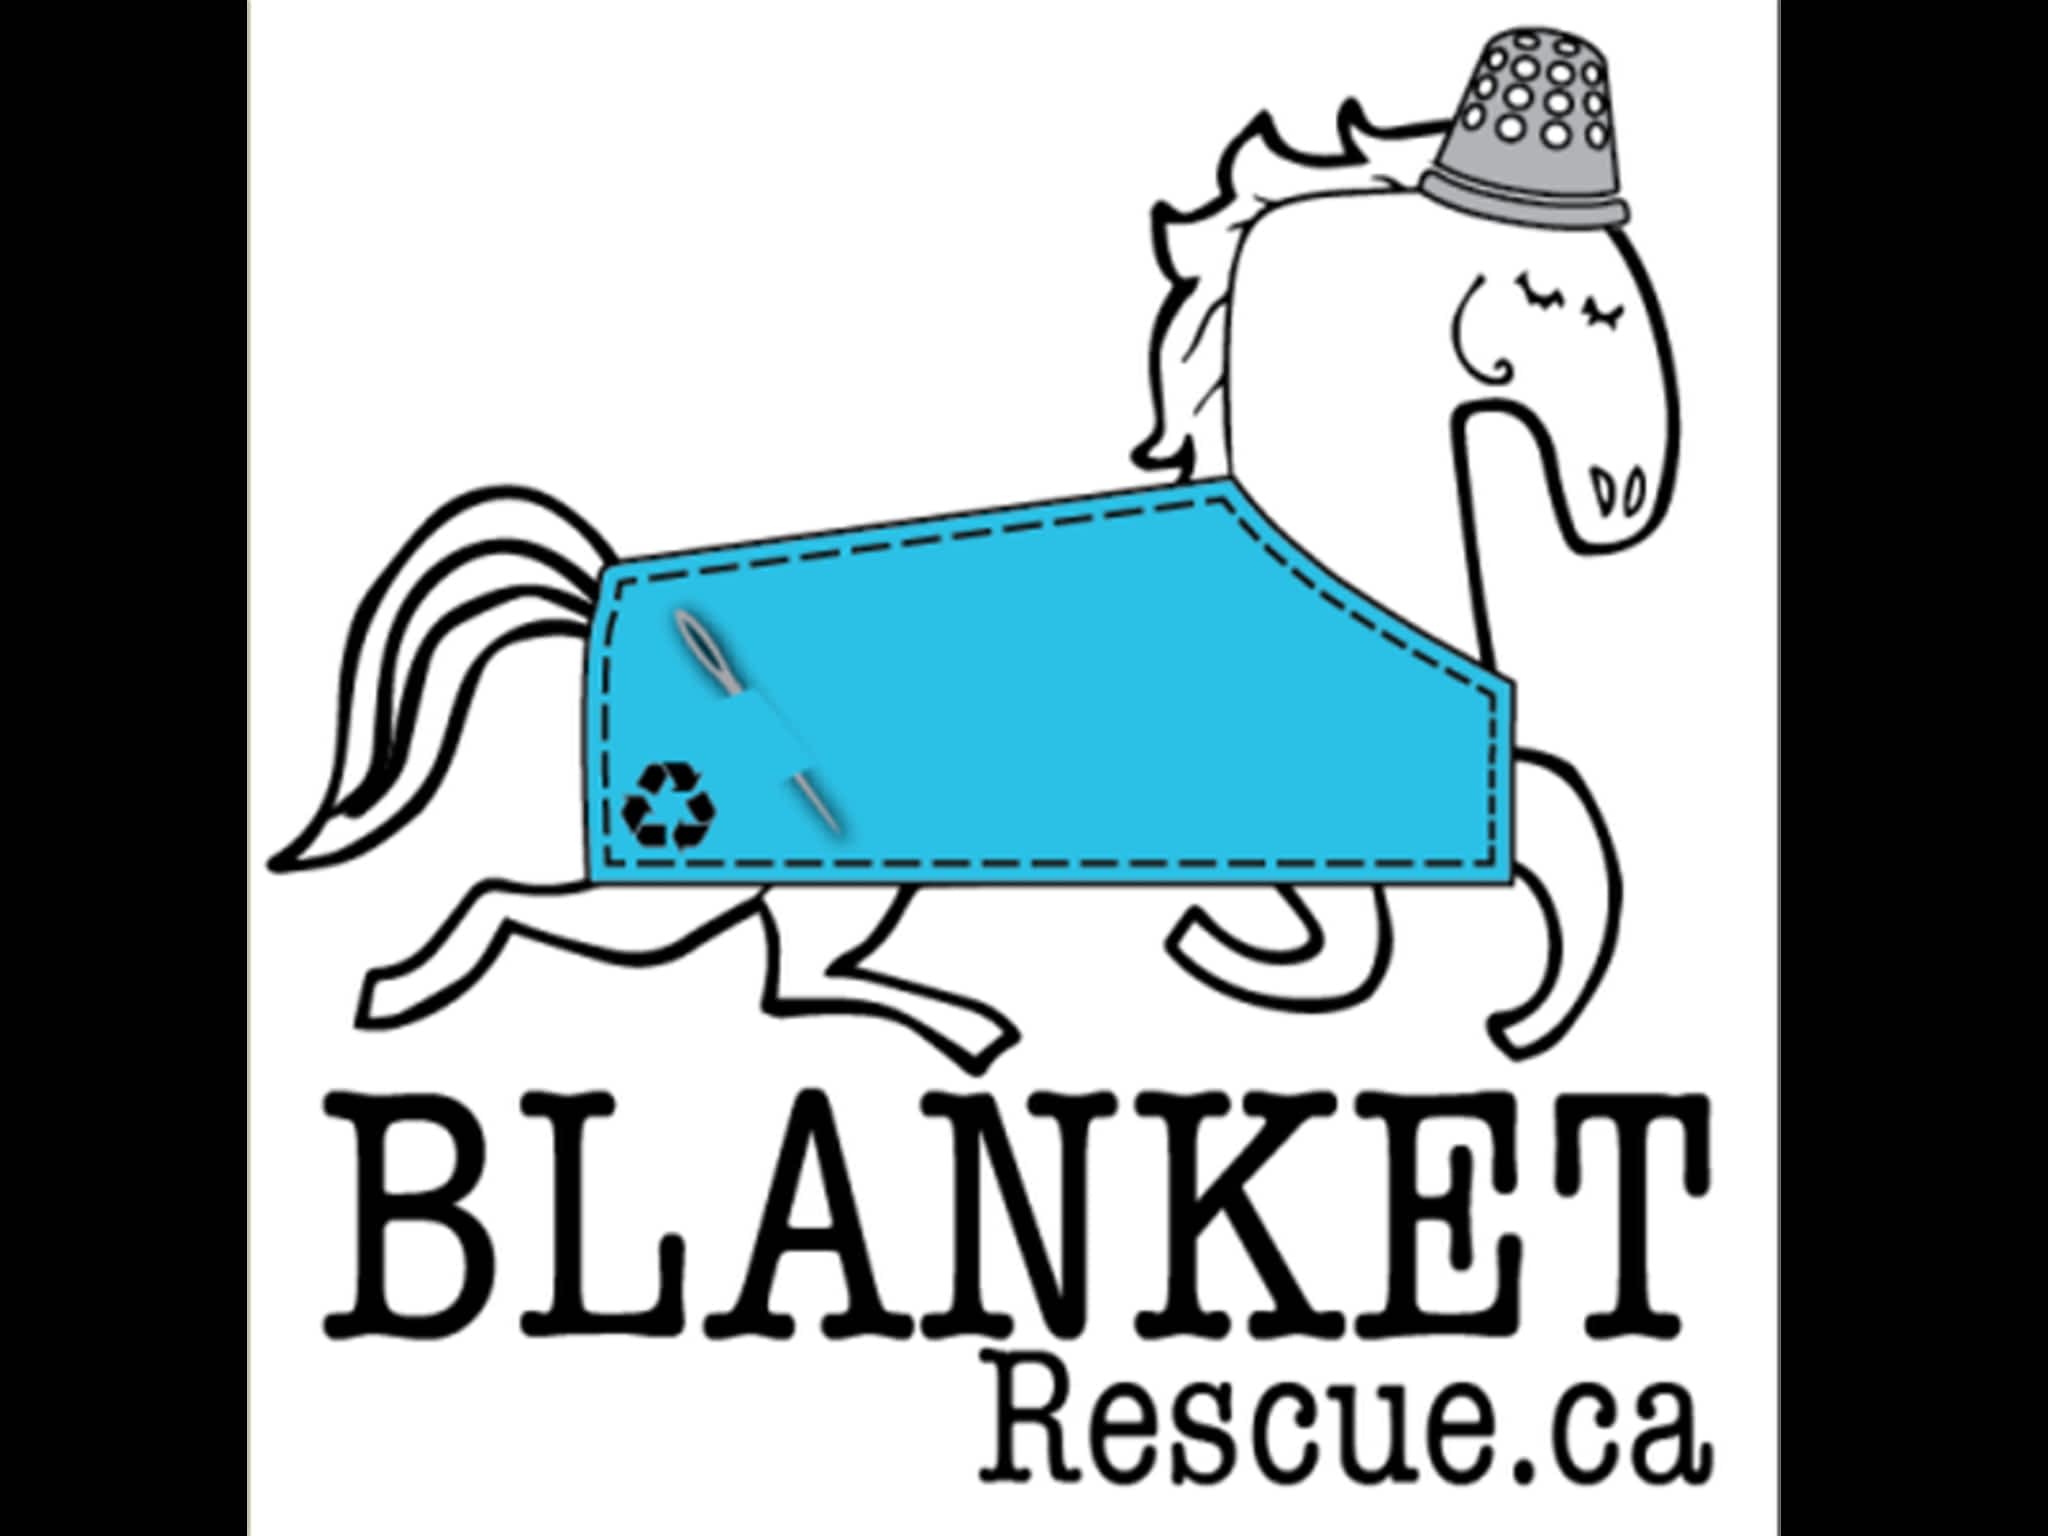 photo Blanket Rescue